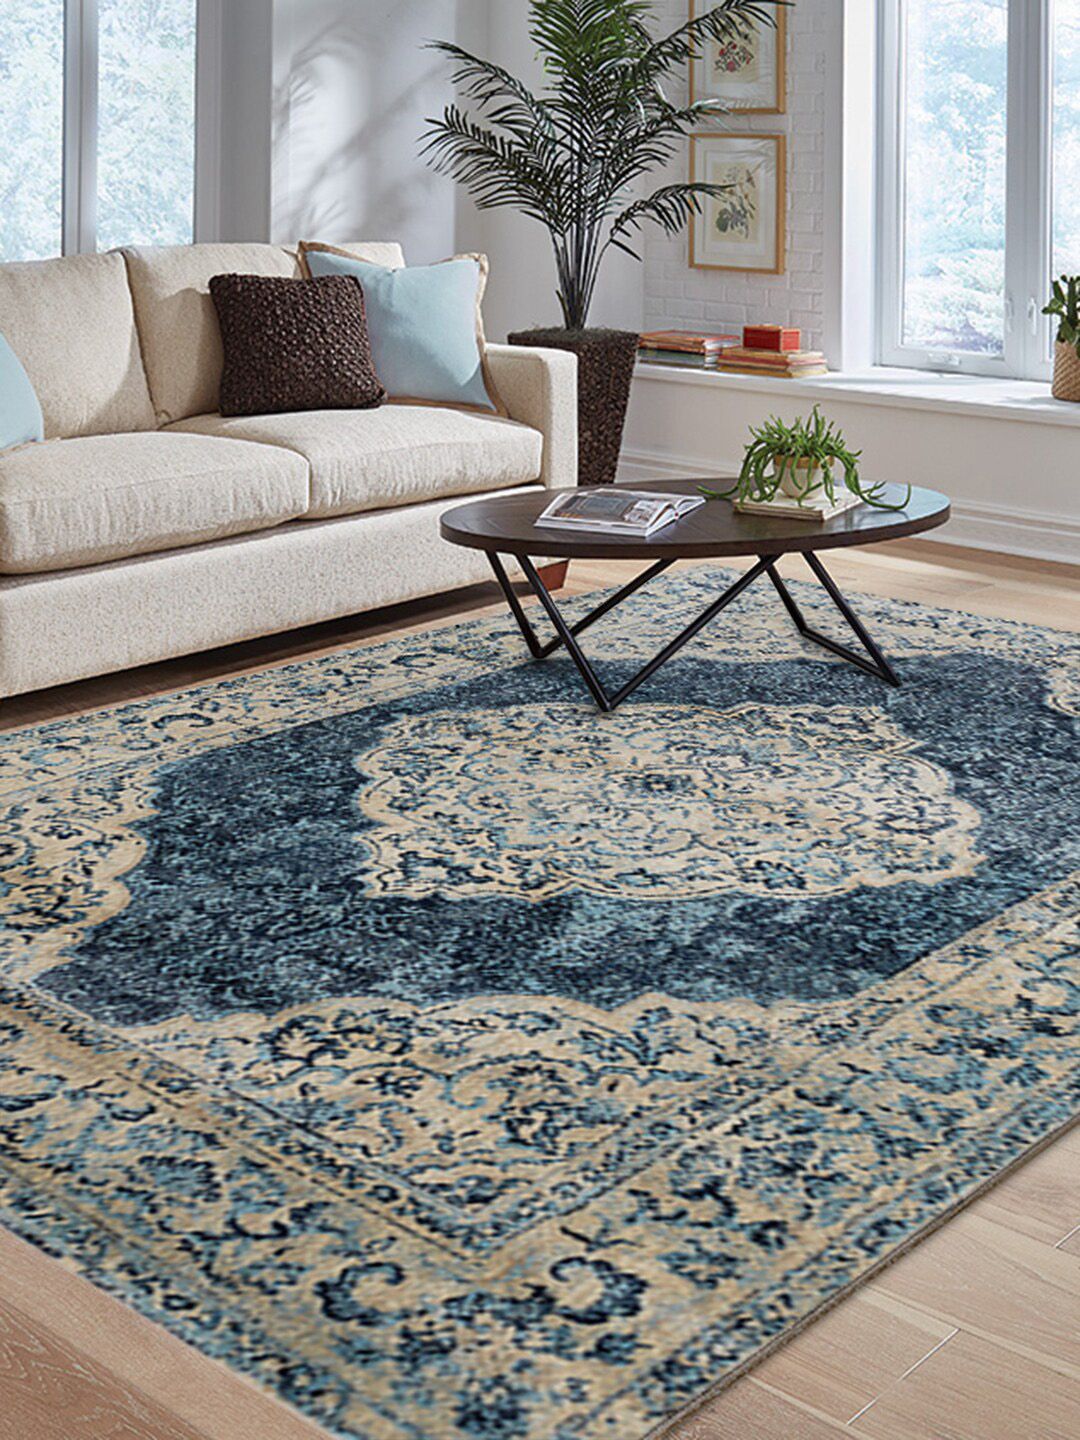 DDecor Blue & Beige Traditional Rectangular Polypropylene Carpet Price in India